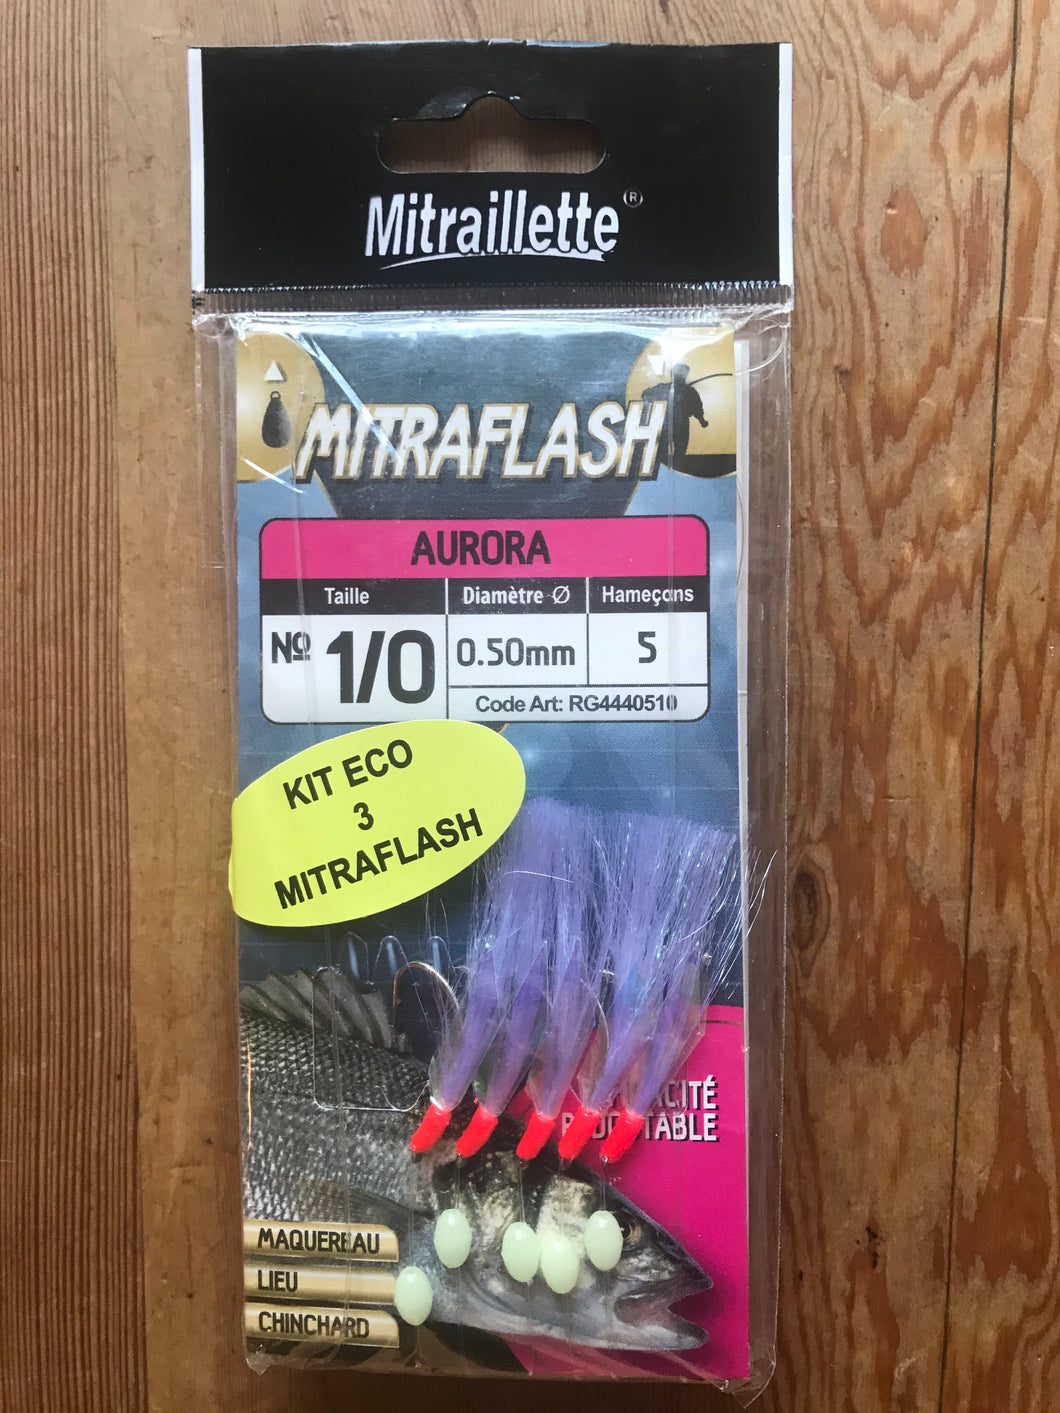 Mitraflash Feathers